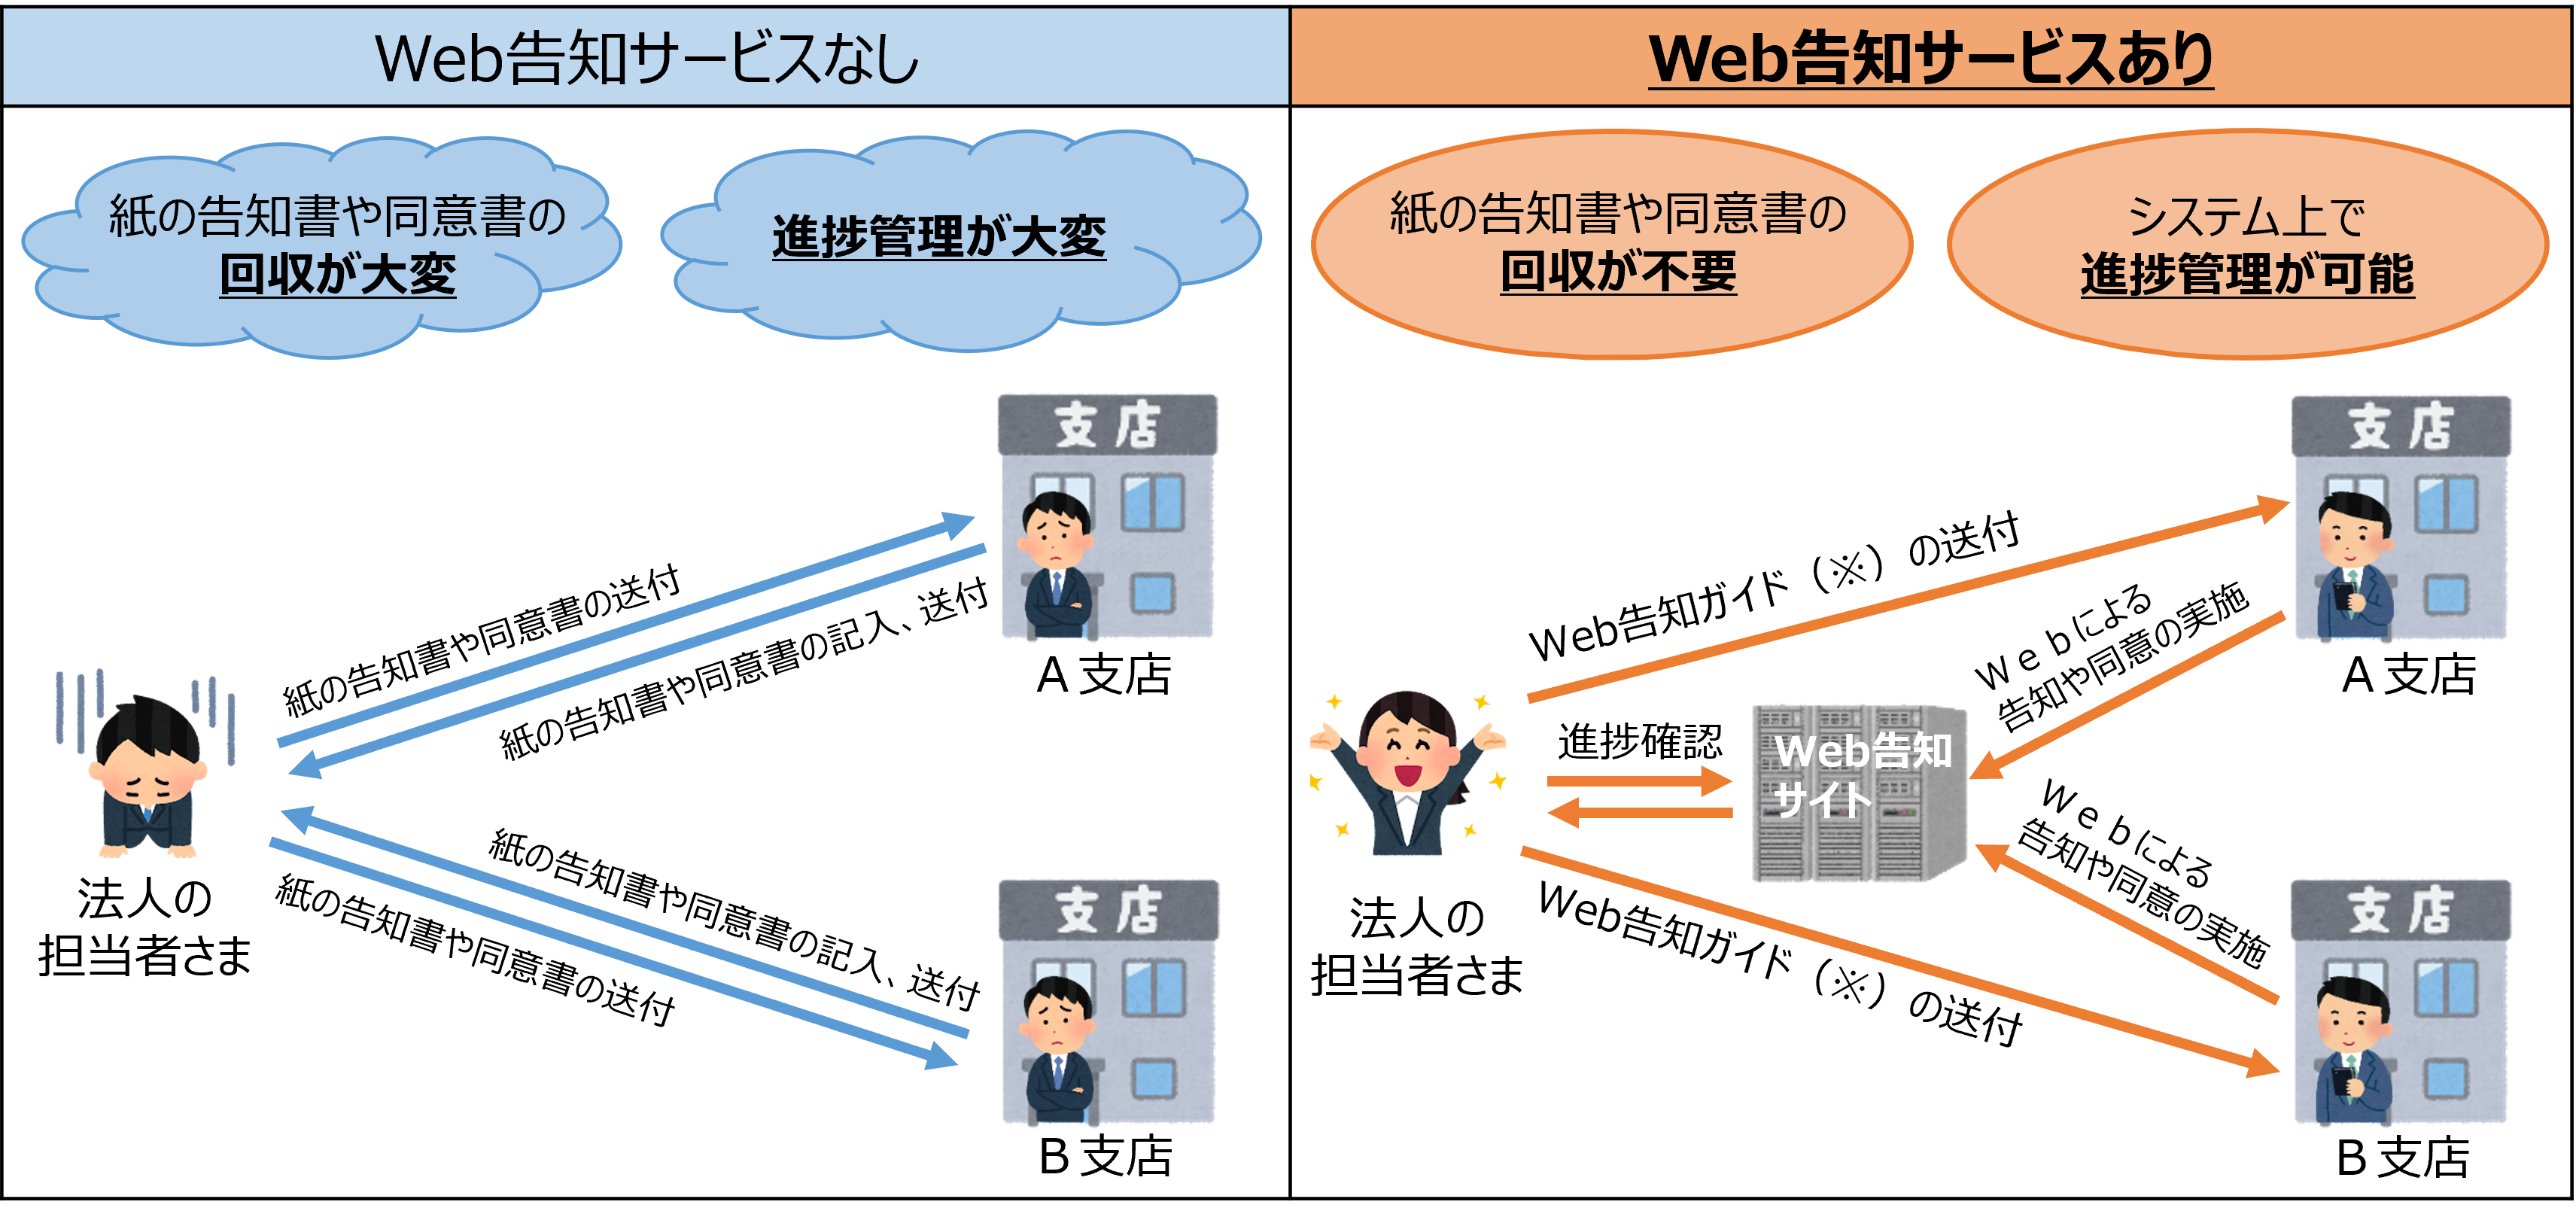 Web告知サービスのイメージ図